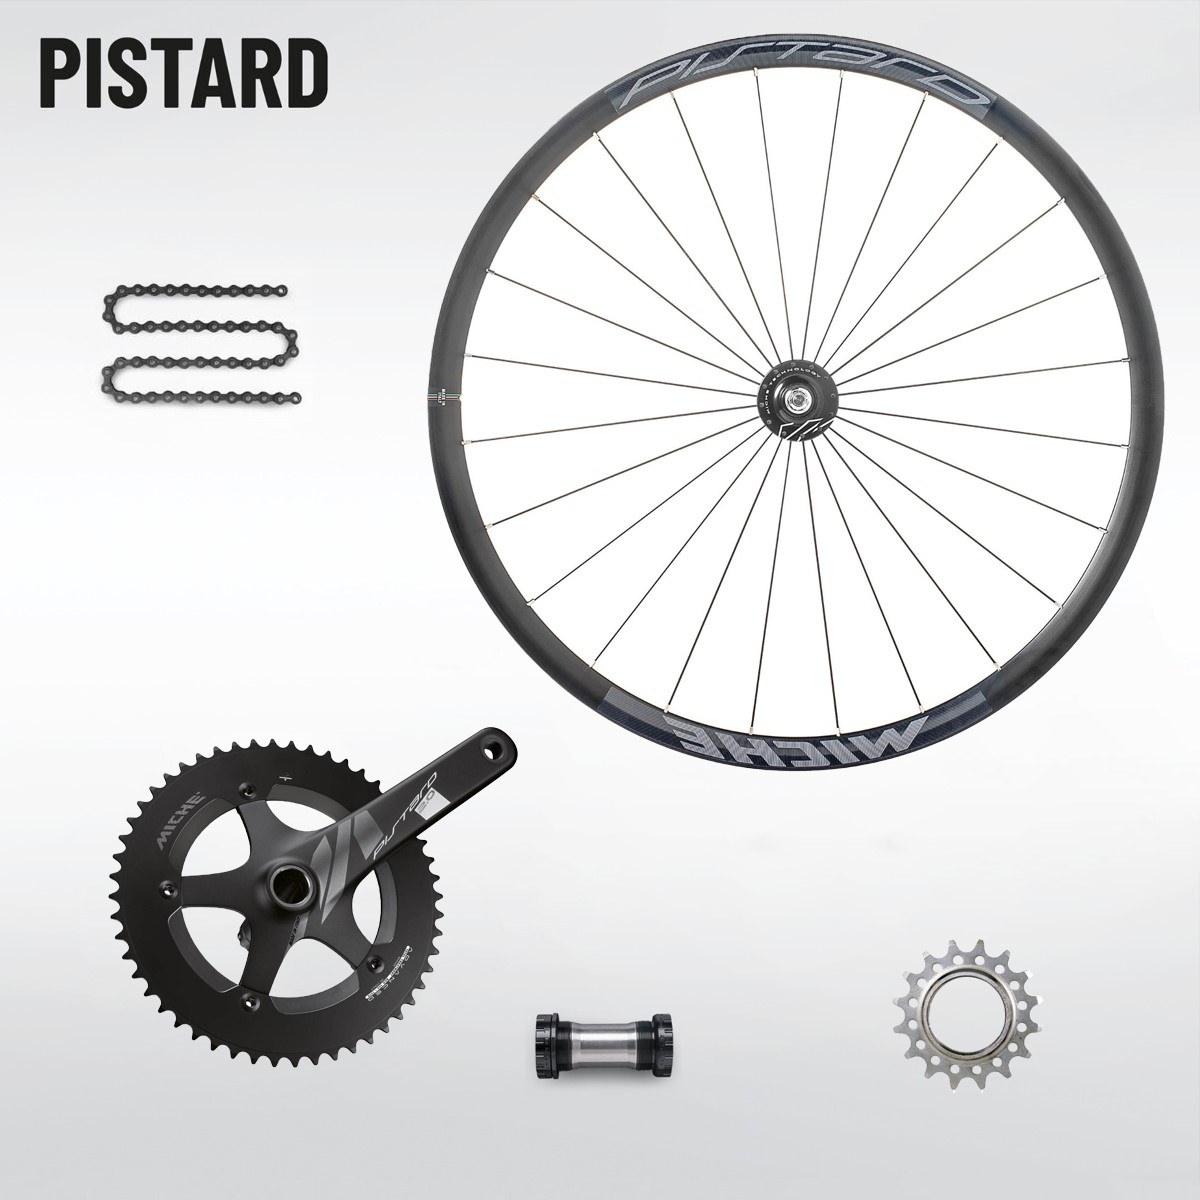 PISTARD 2.0 BLACK. Wheels: All black 'brakeless' alloy rims, single-side  threaded hub. Crankset: Black 170mm 2-pc, 5 arm, Chainring: black 48t / 144 